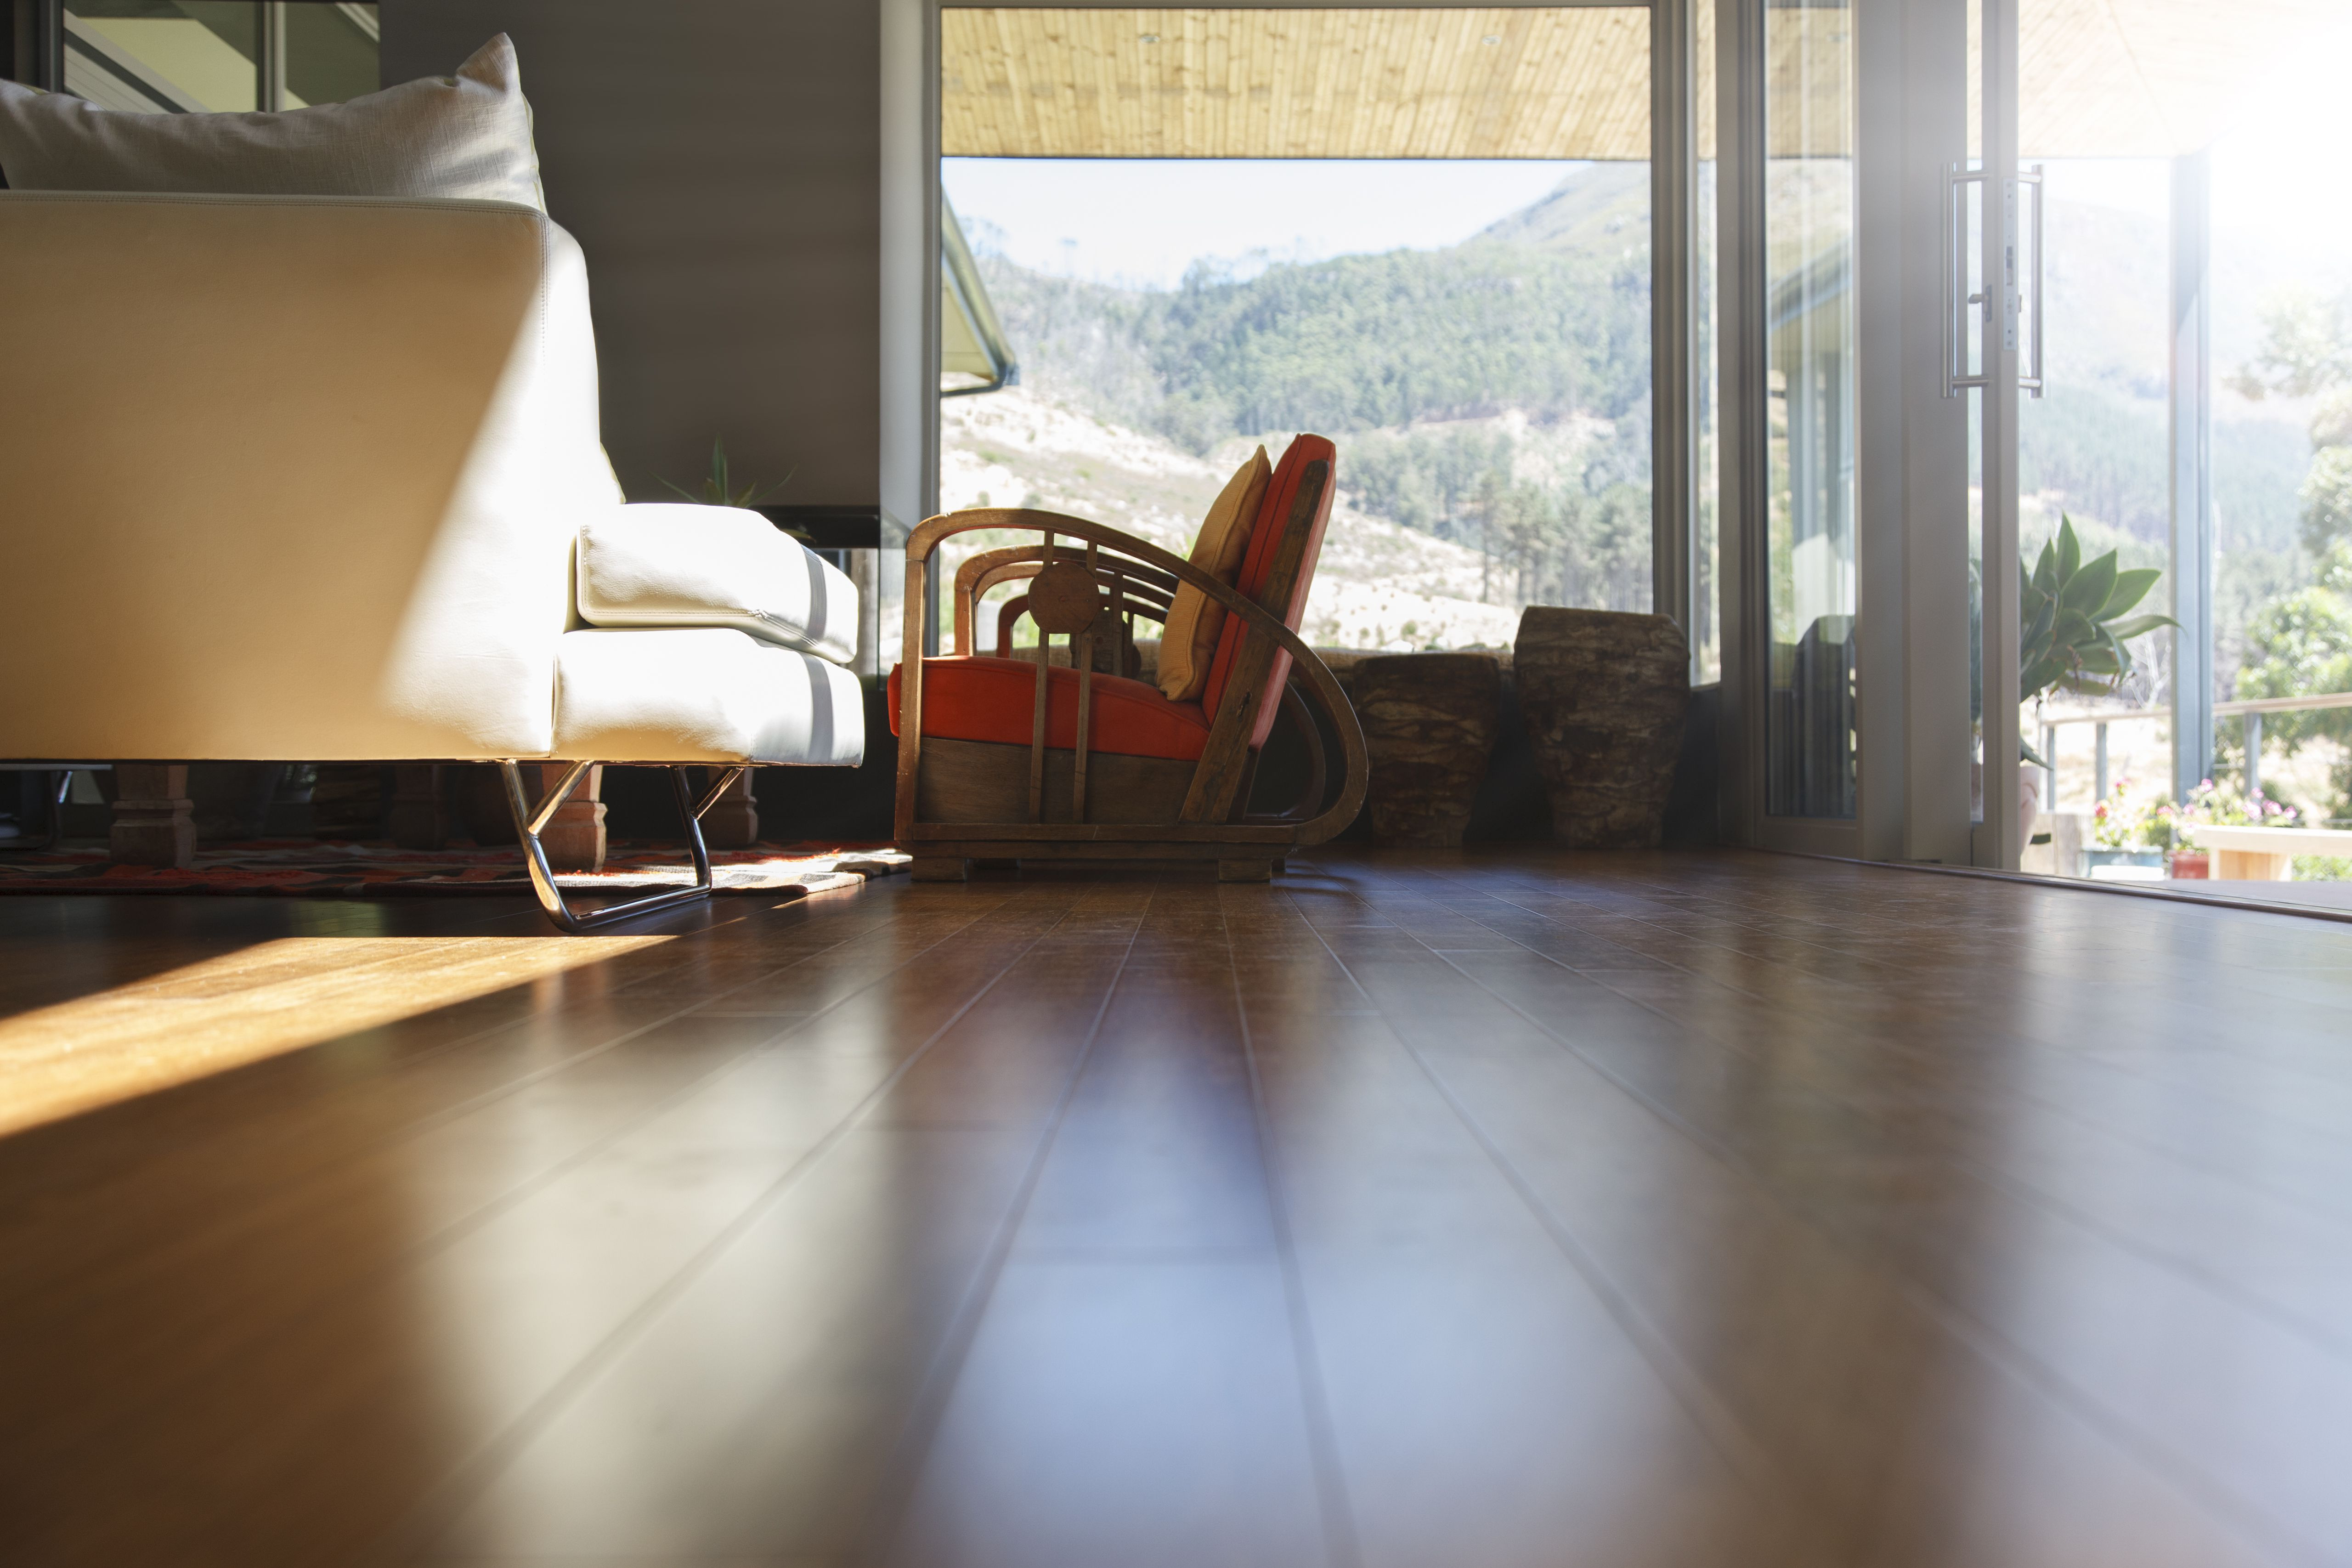 vinyl hardwood floor cleaner of a vinyl plank flooring guide throughout living room interior hard wood floor and sofa 525439899 57e95e215f9b586c359d5ab1